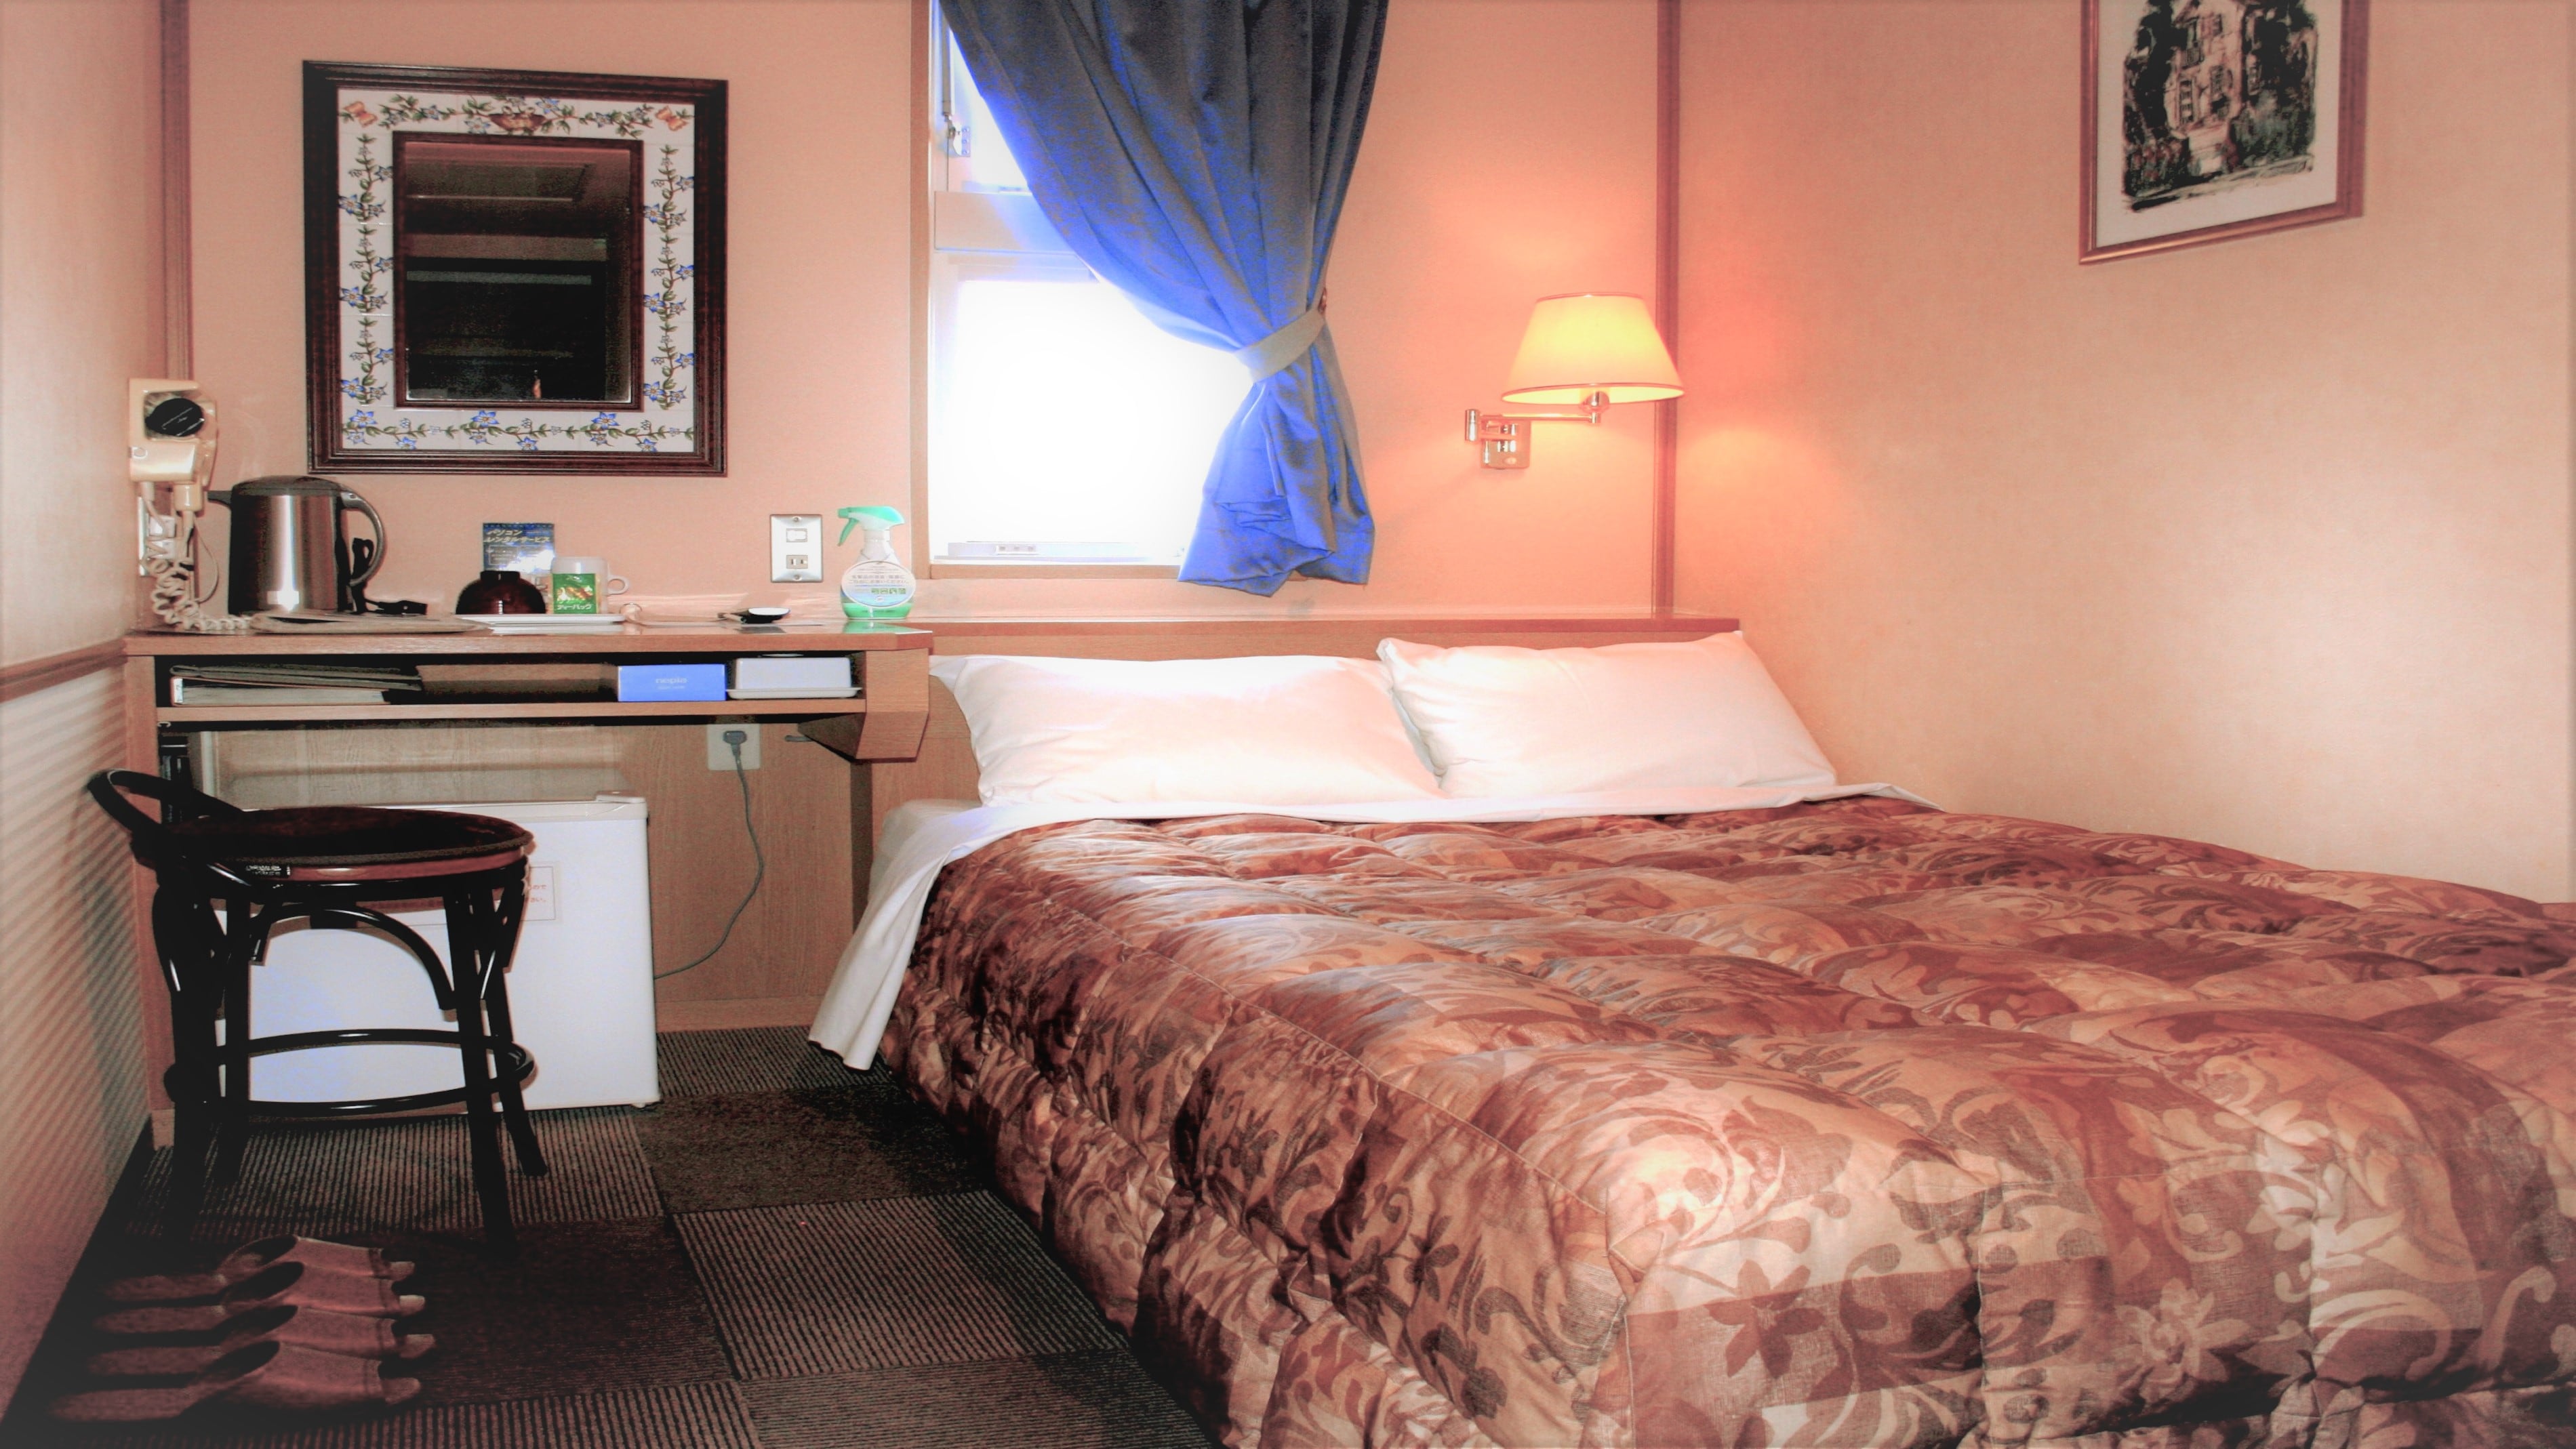 Semua kamar single (semi-double bed) dilengkapi dengan tempat tidur cadangan untuk 2 orang sebagai standar.